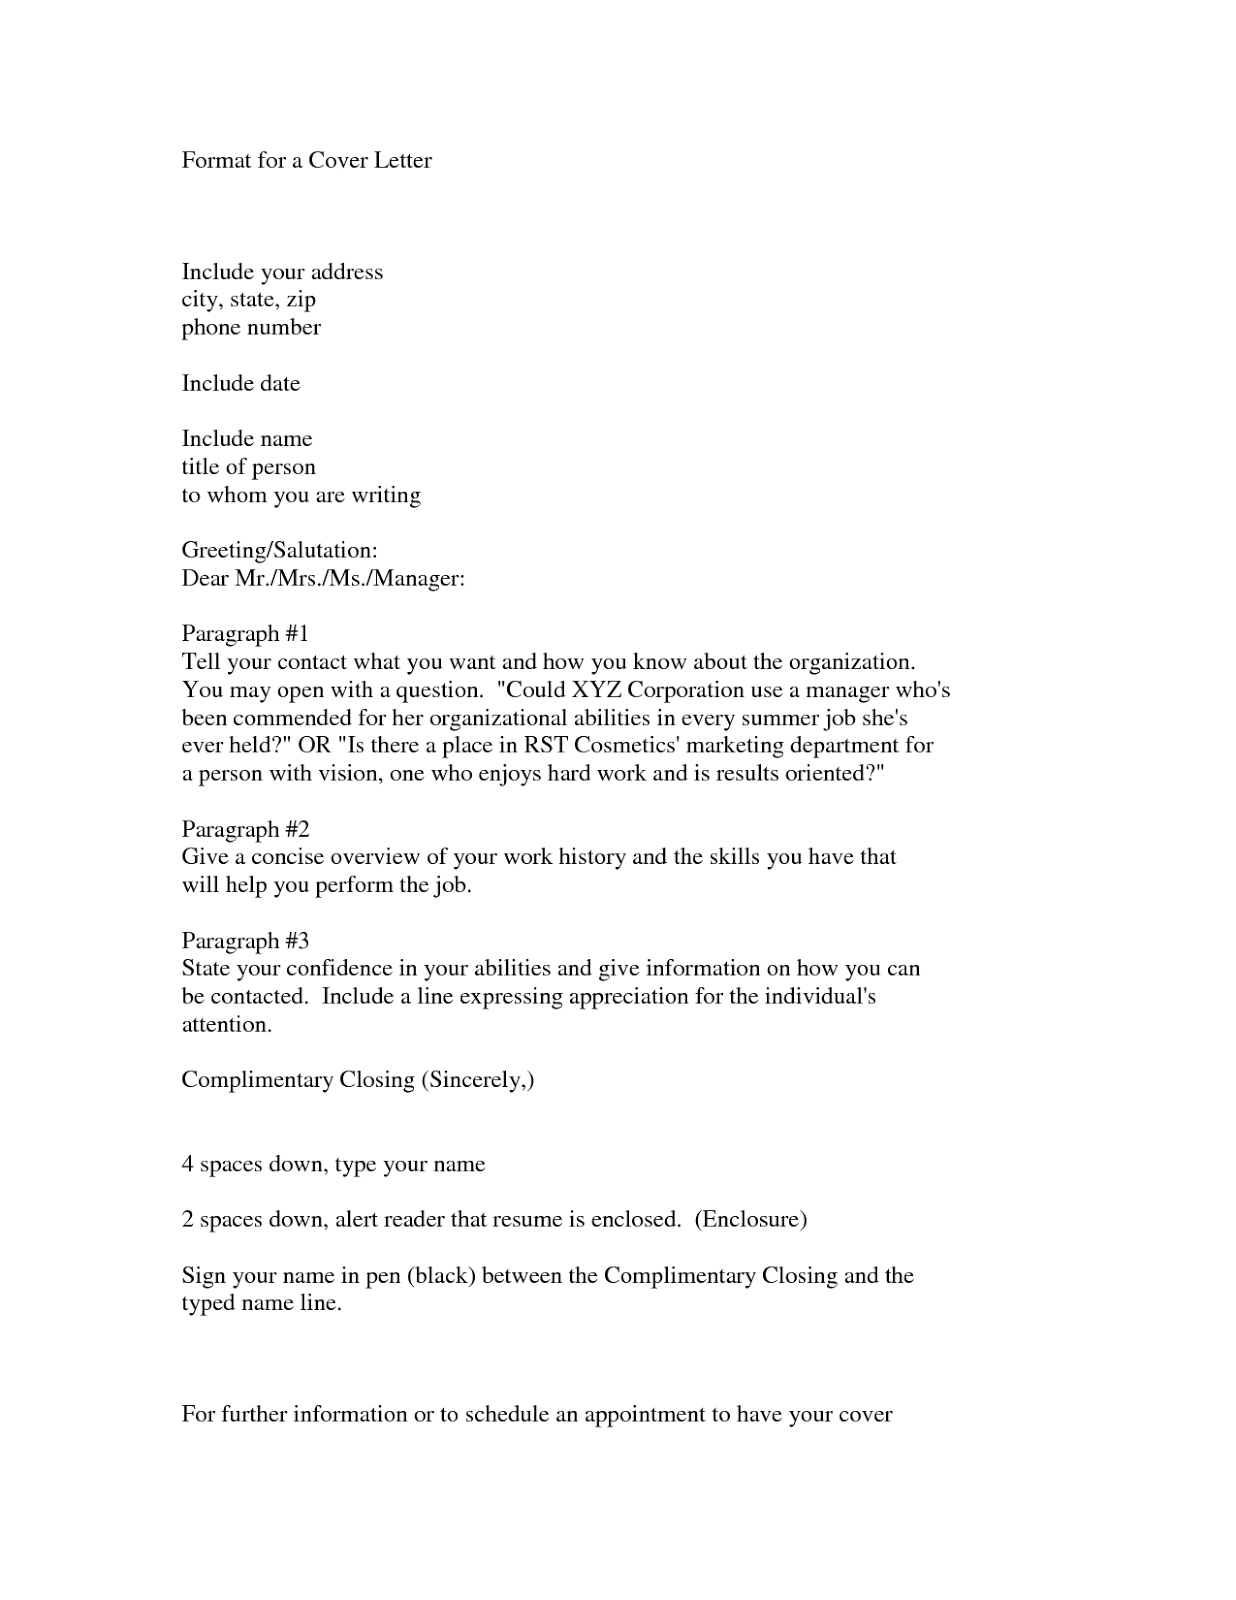 Cover letter for website job posting